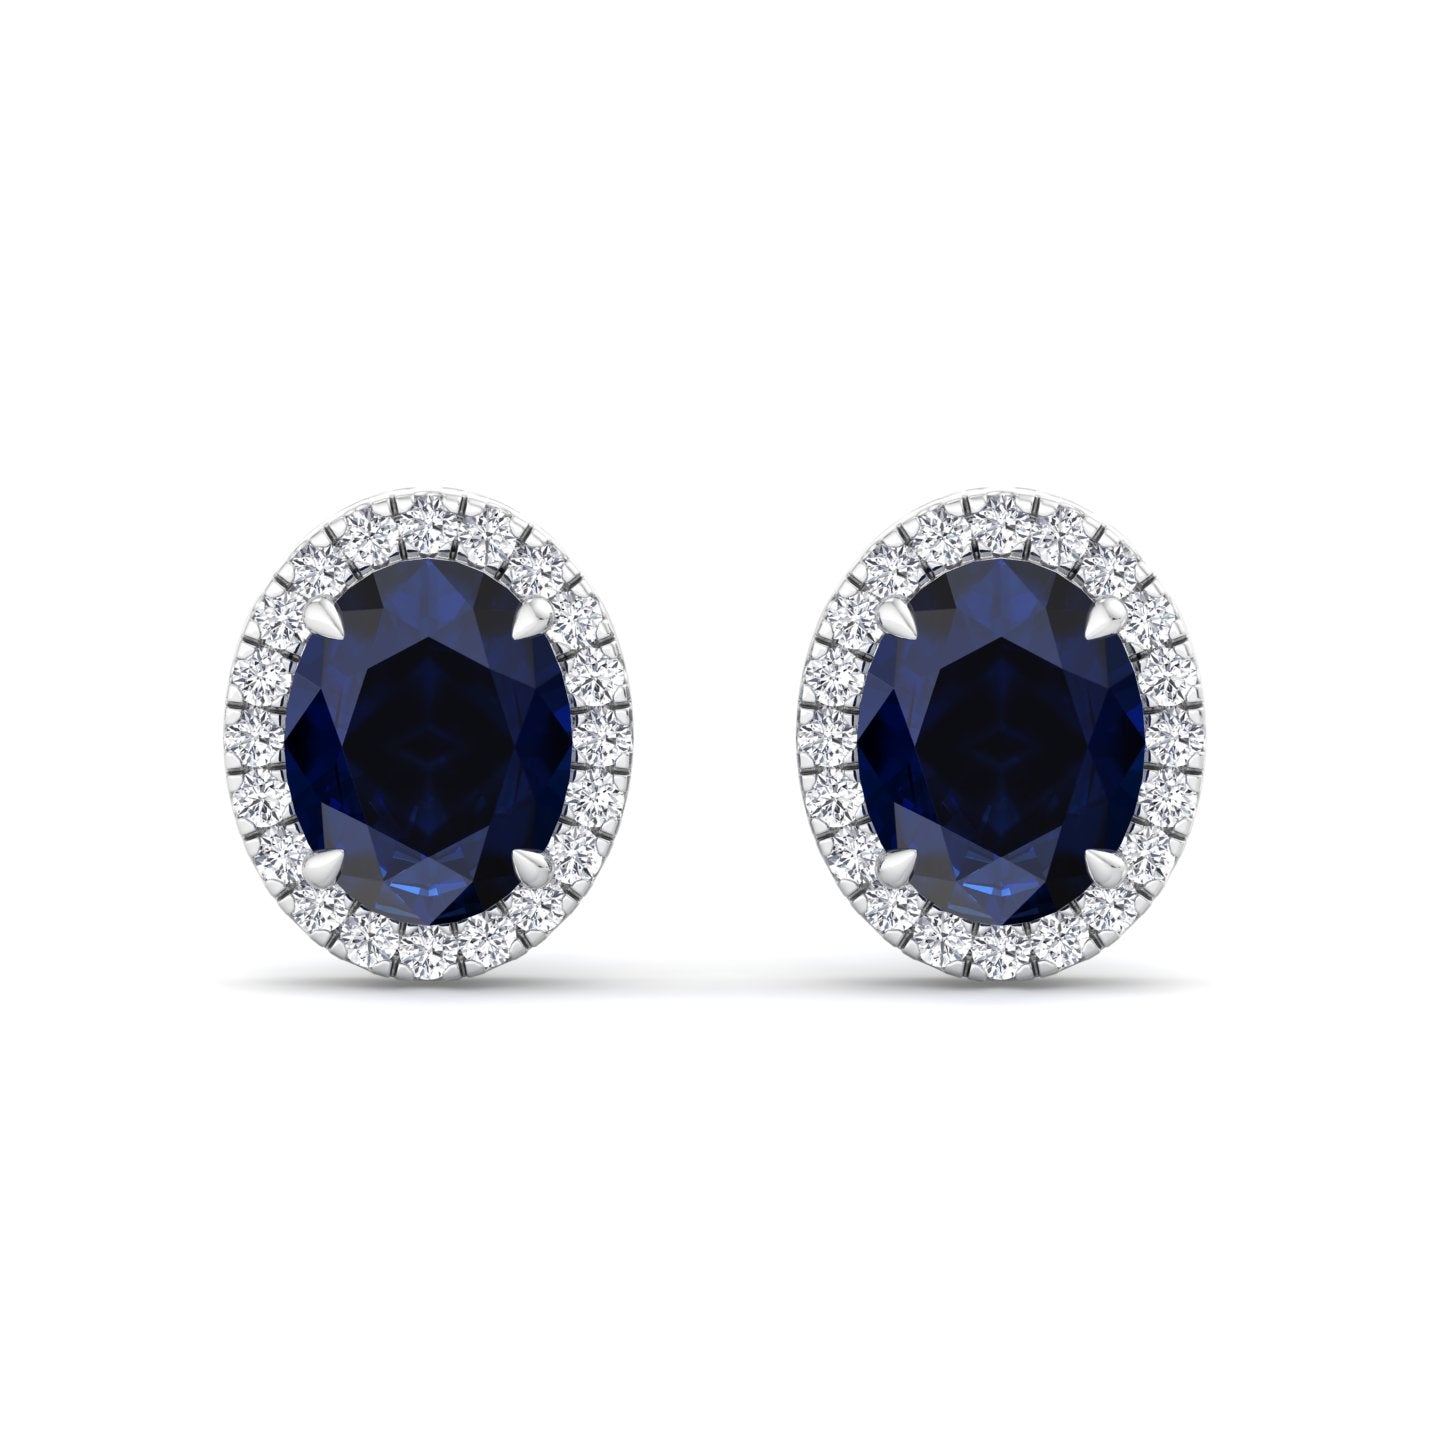 Acqua - Oval Cut Sapphire and Diamond Halo Earrings